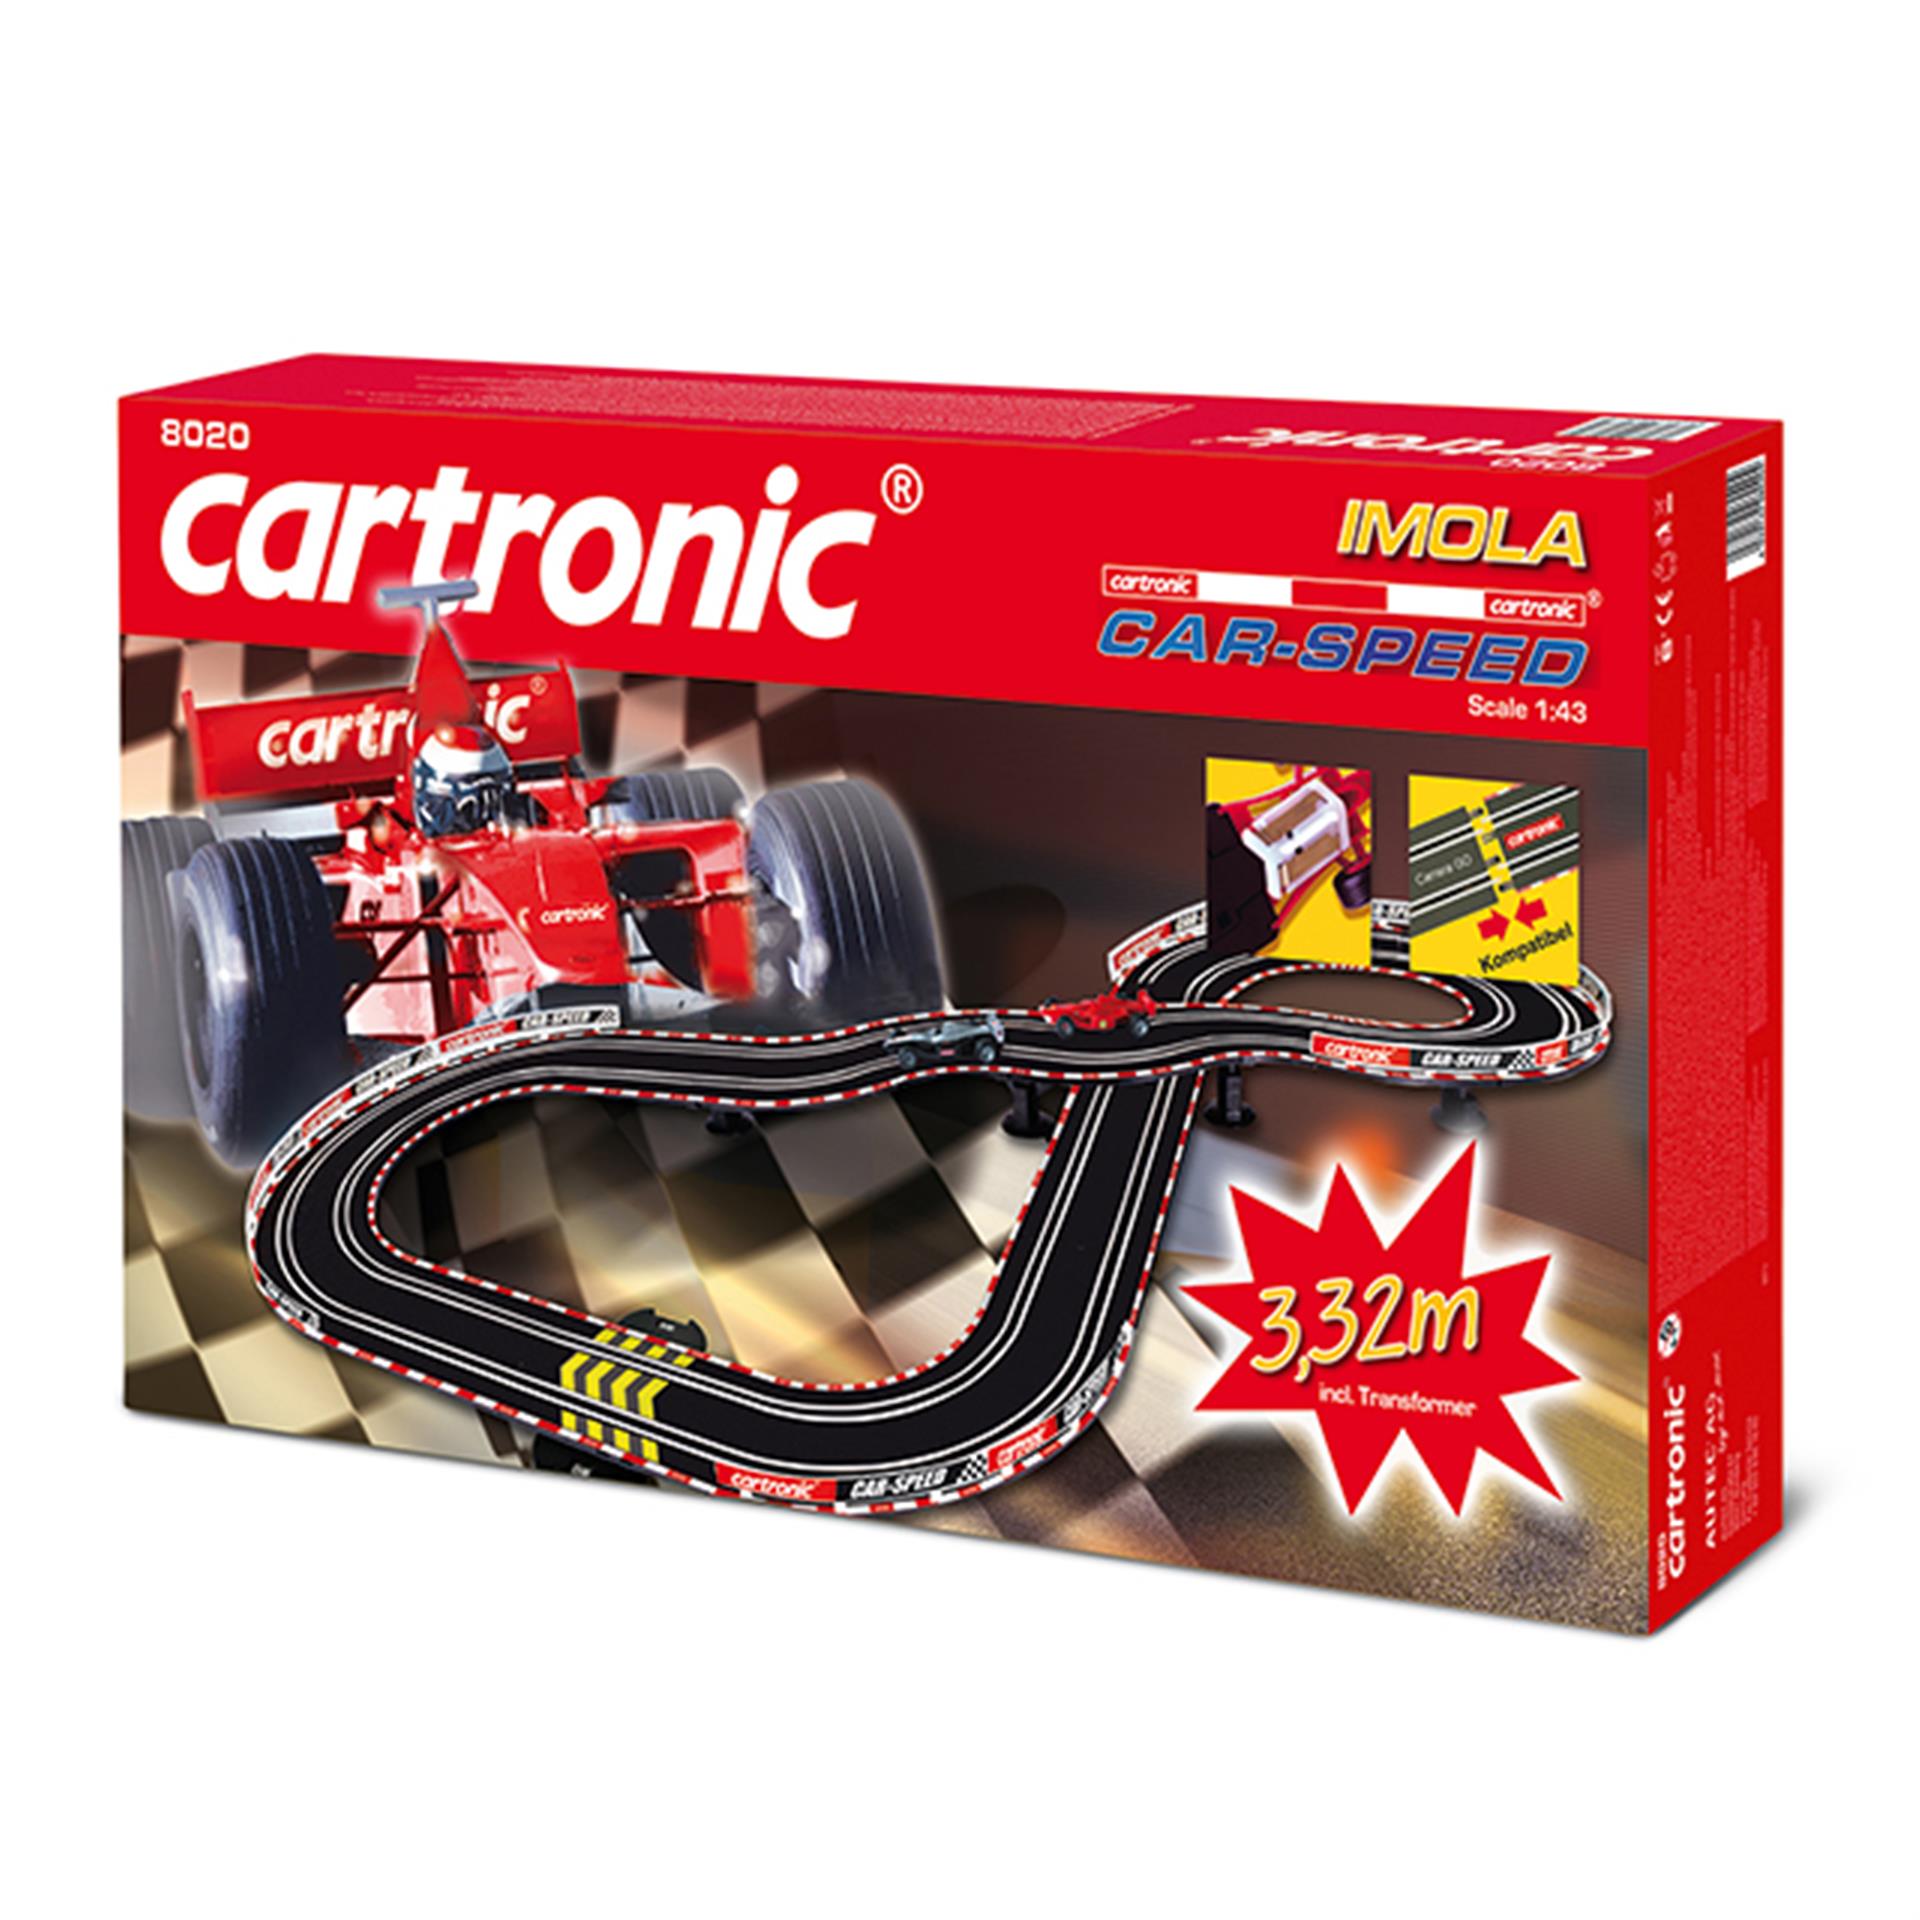 Cartronic Car Speed Imola 1:43